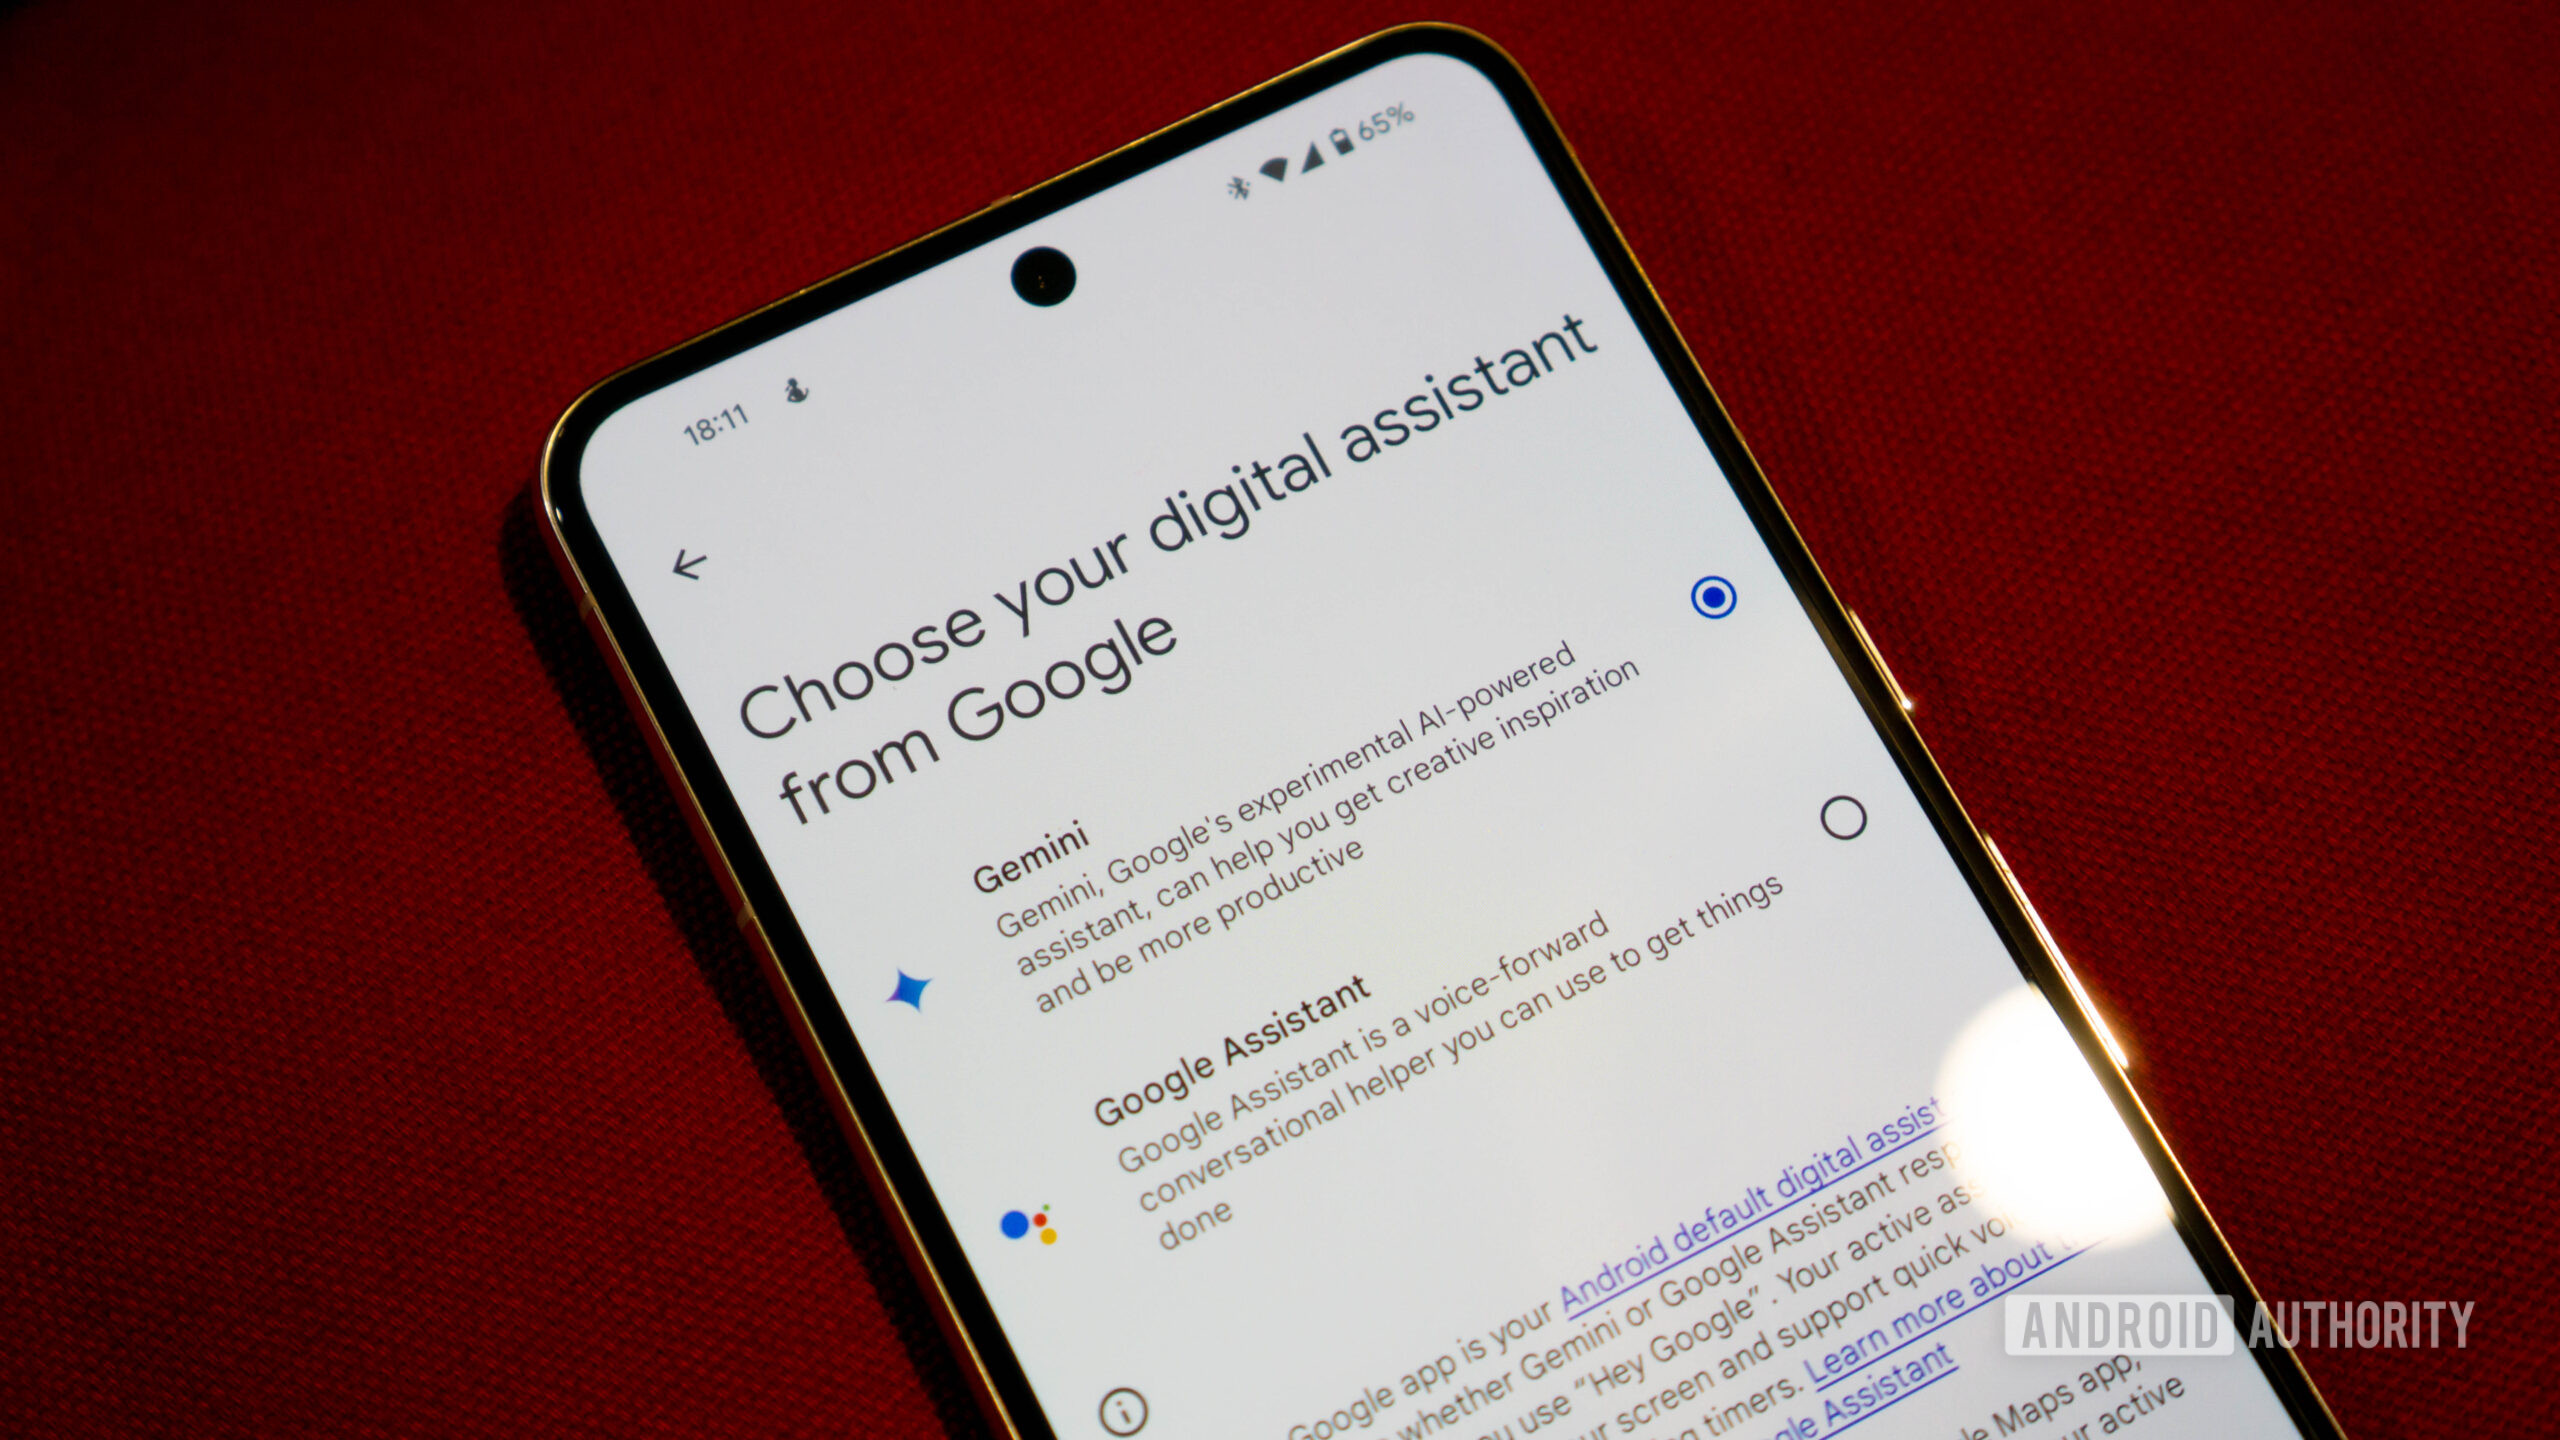 google choose digital assistant